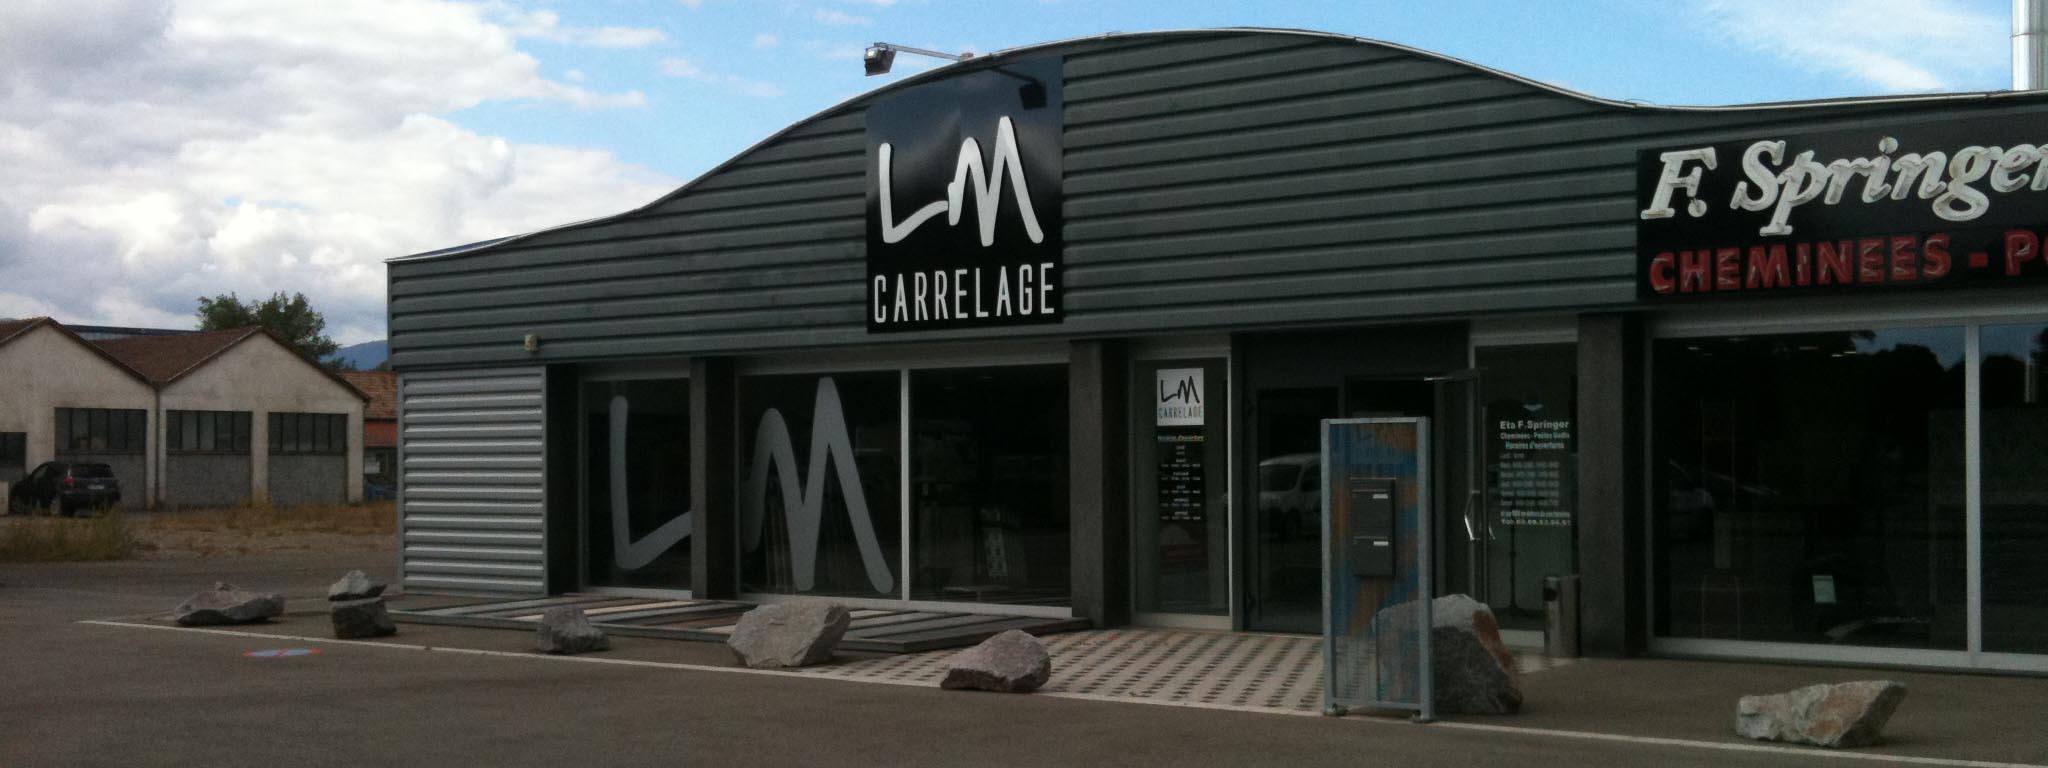 LM-Carrelage-Facade.jpg